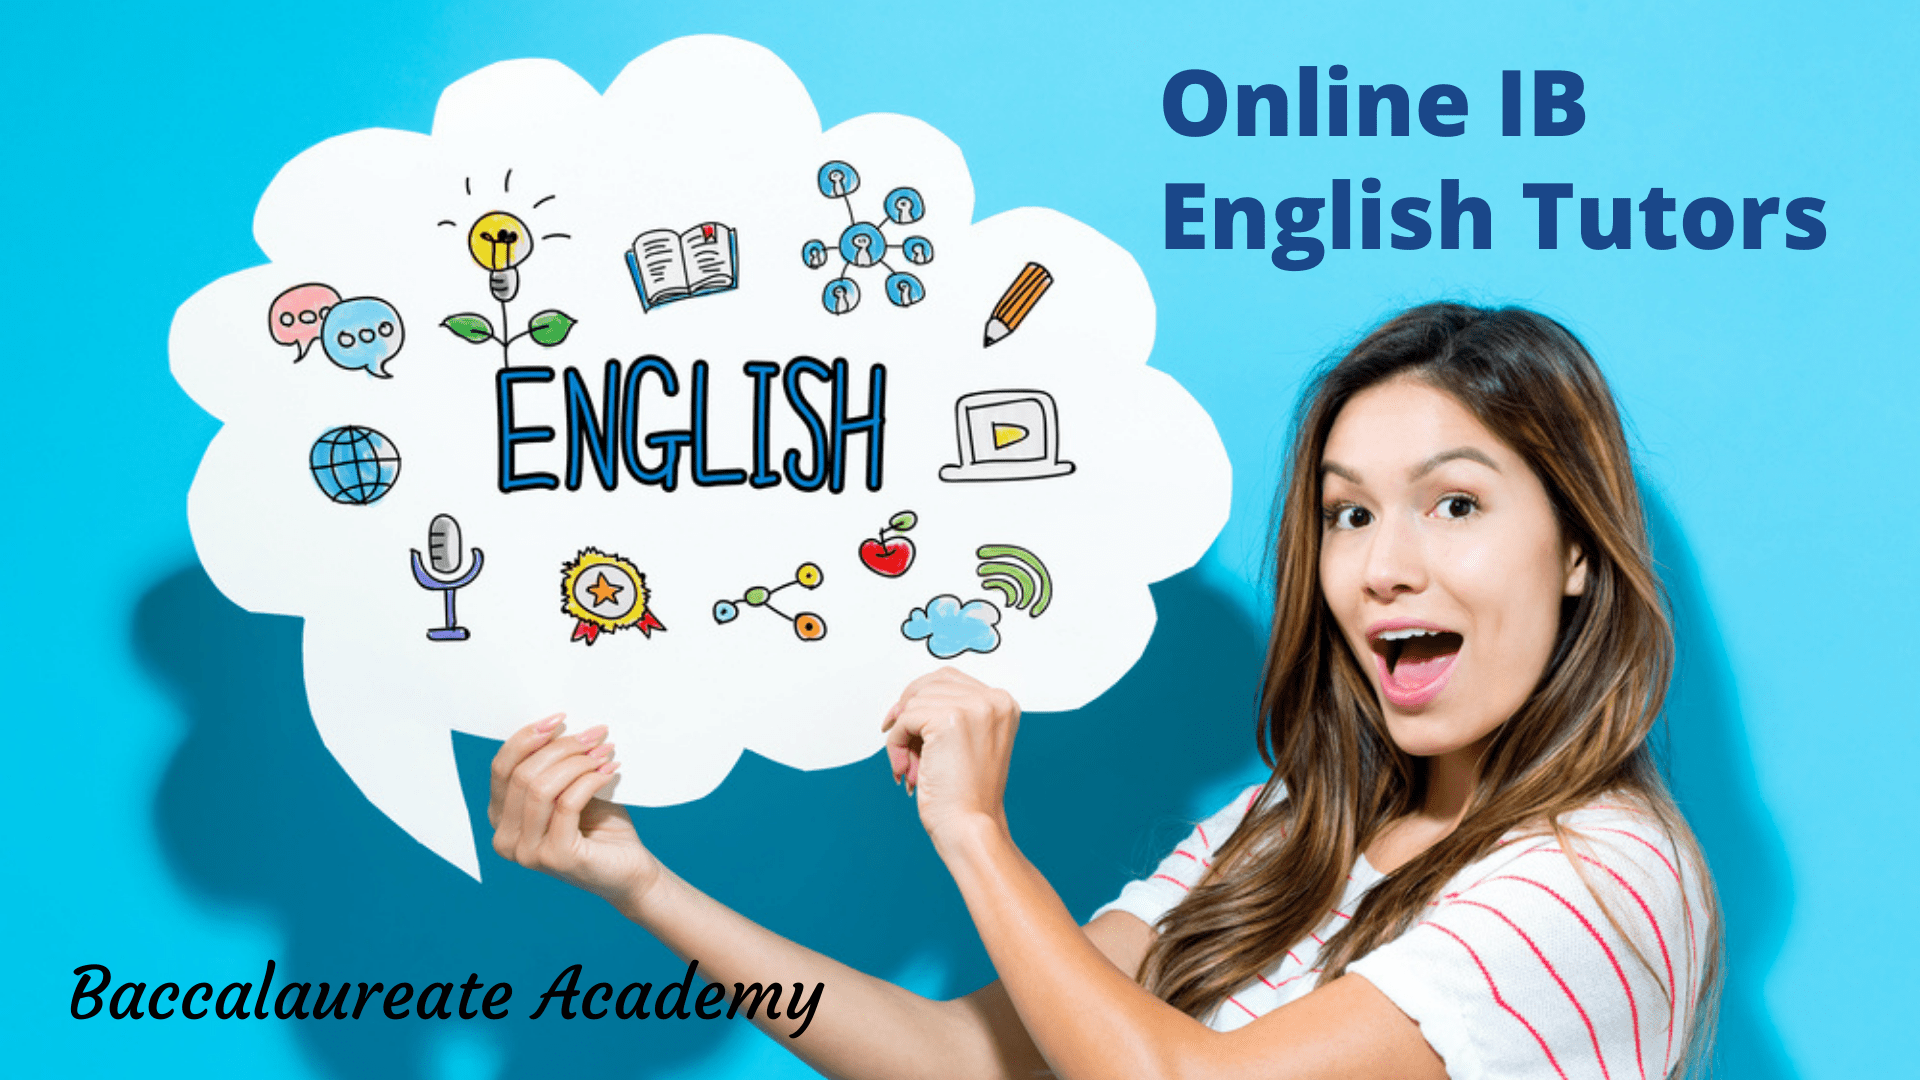 Online IB English Tutors | IB English Tutors - Baccalaureate Academy